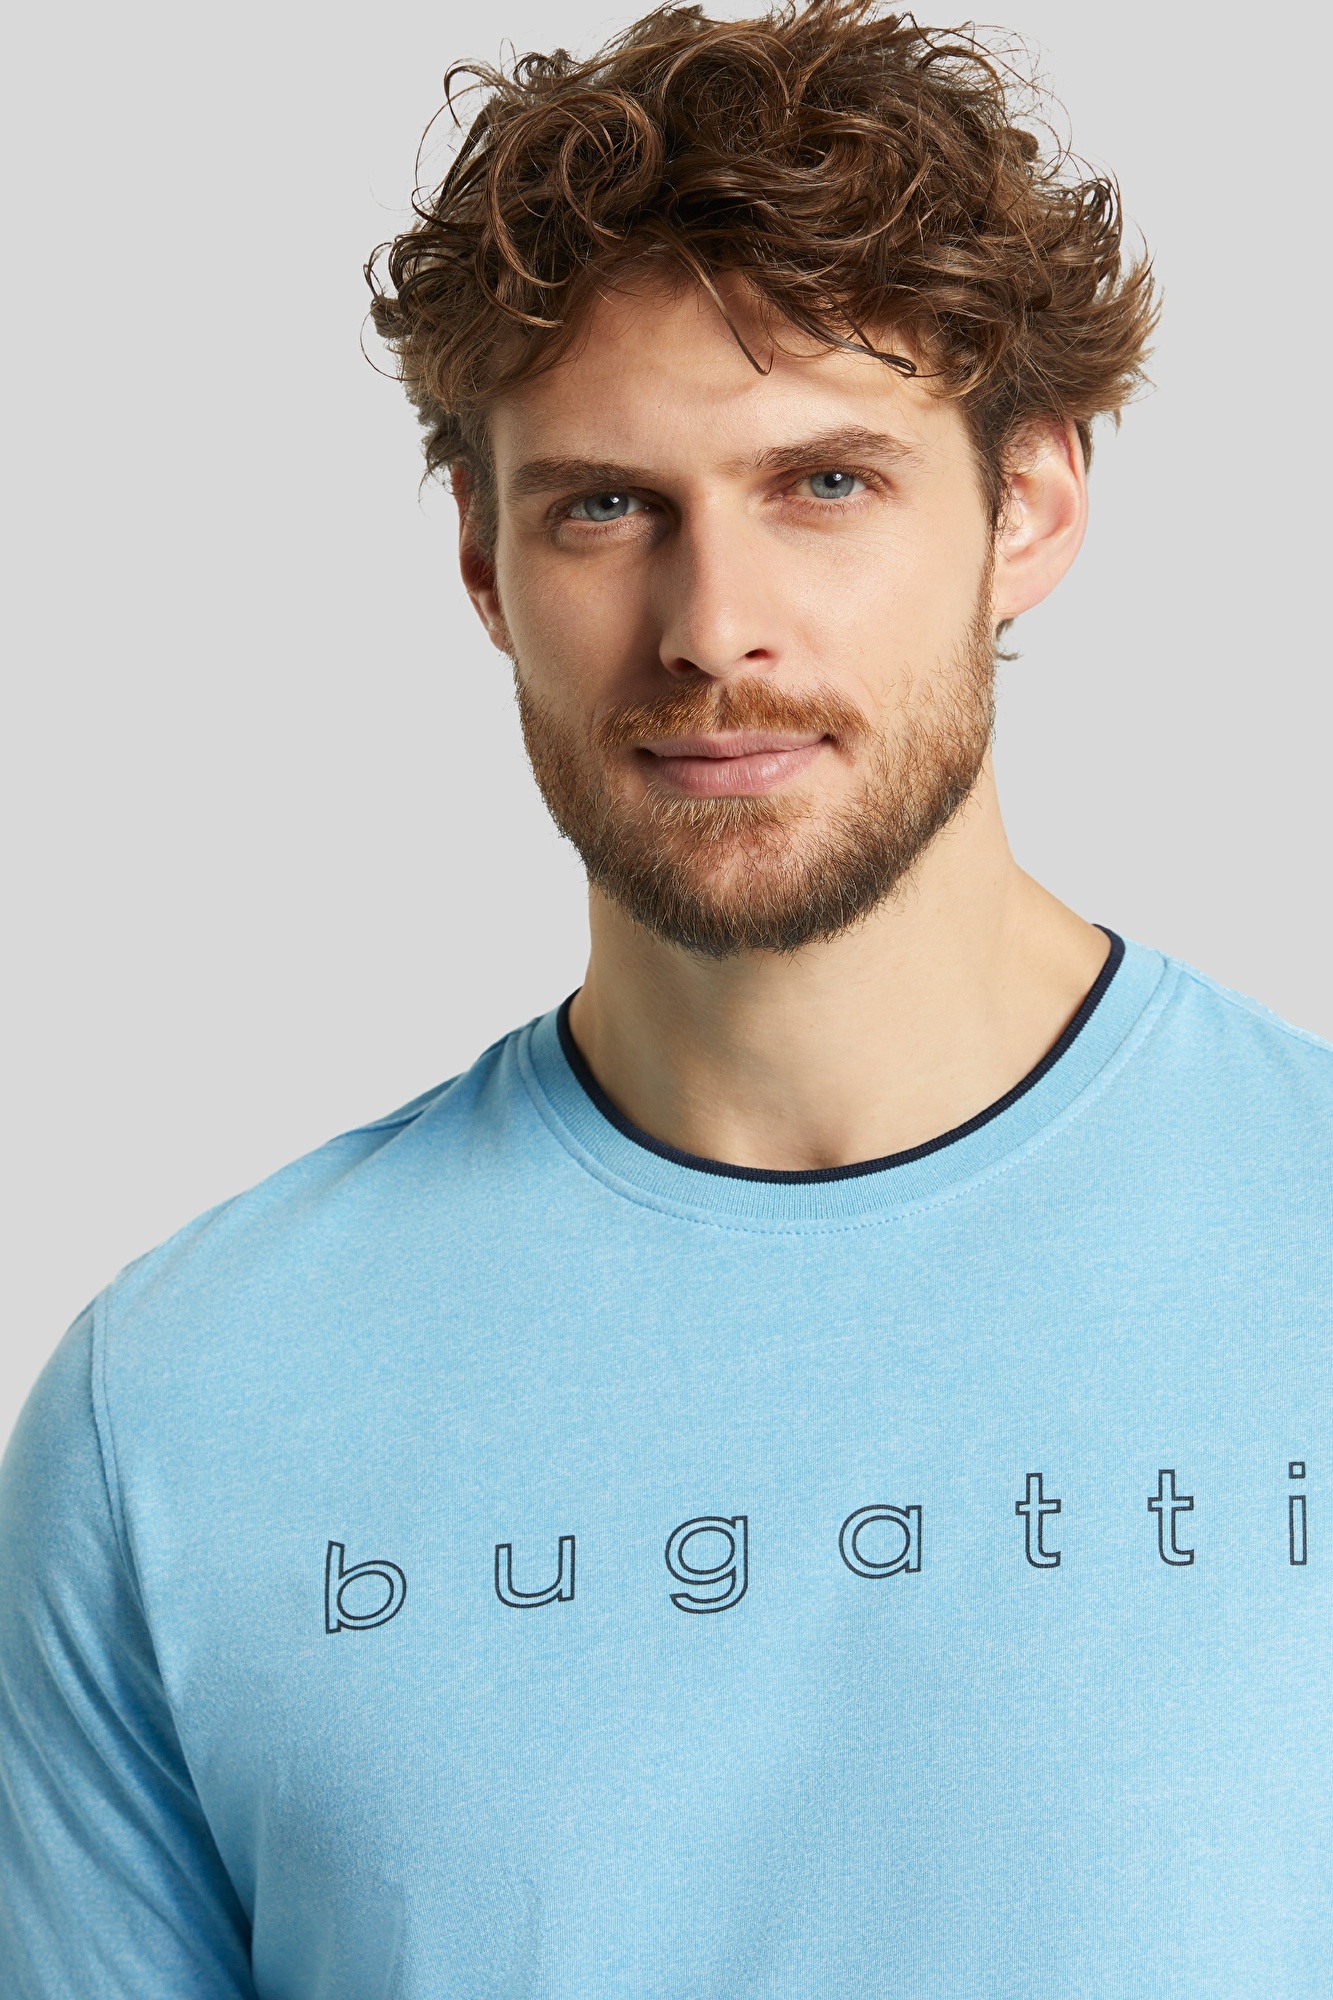 T-Shirt mit großem bugatti Logo-Print in blau | bugatti